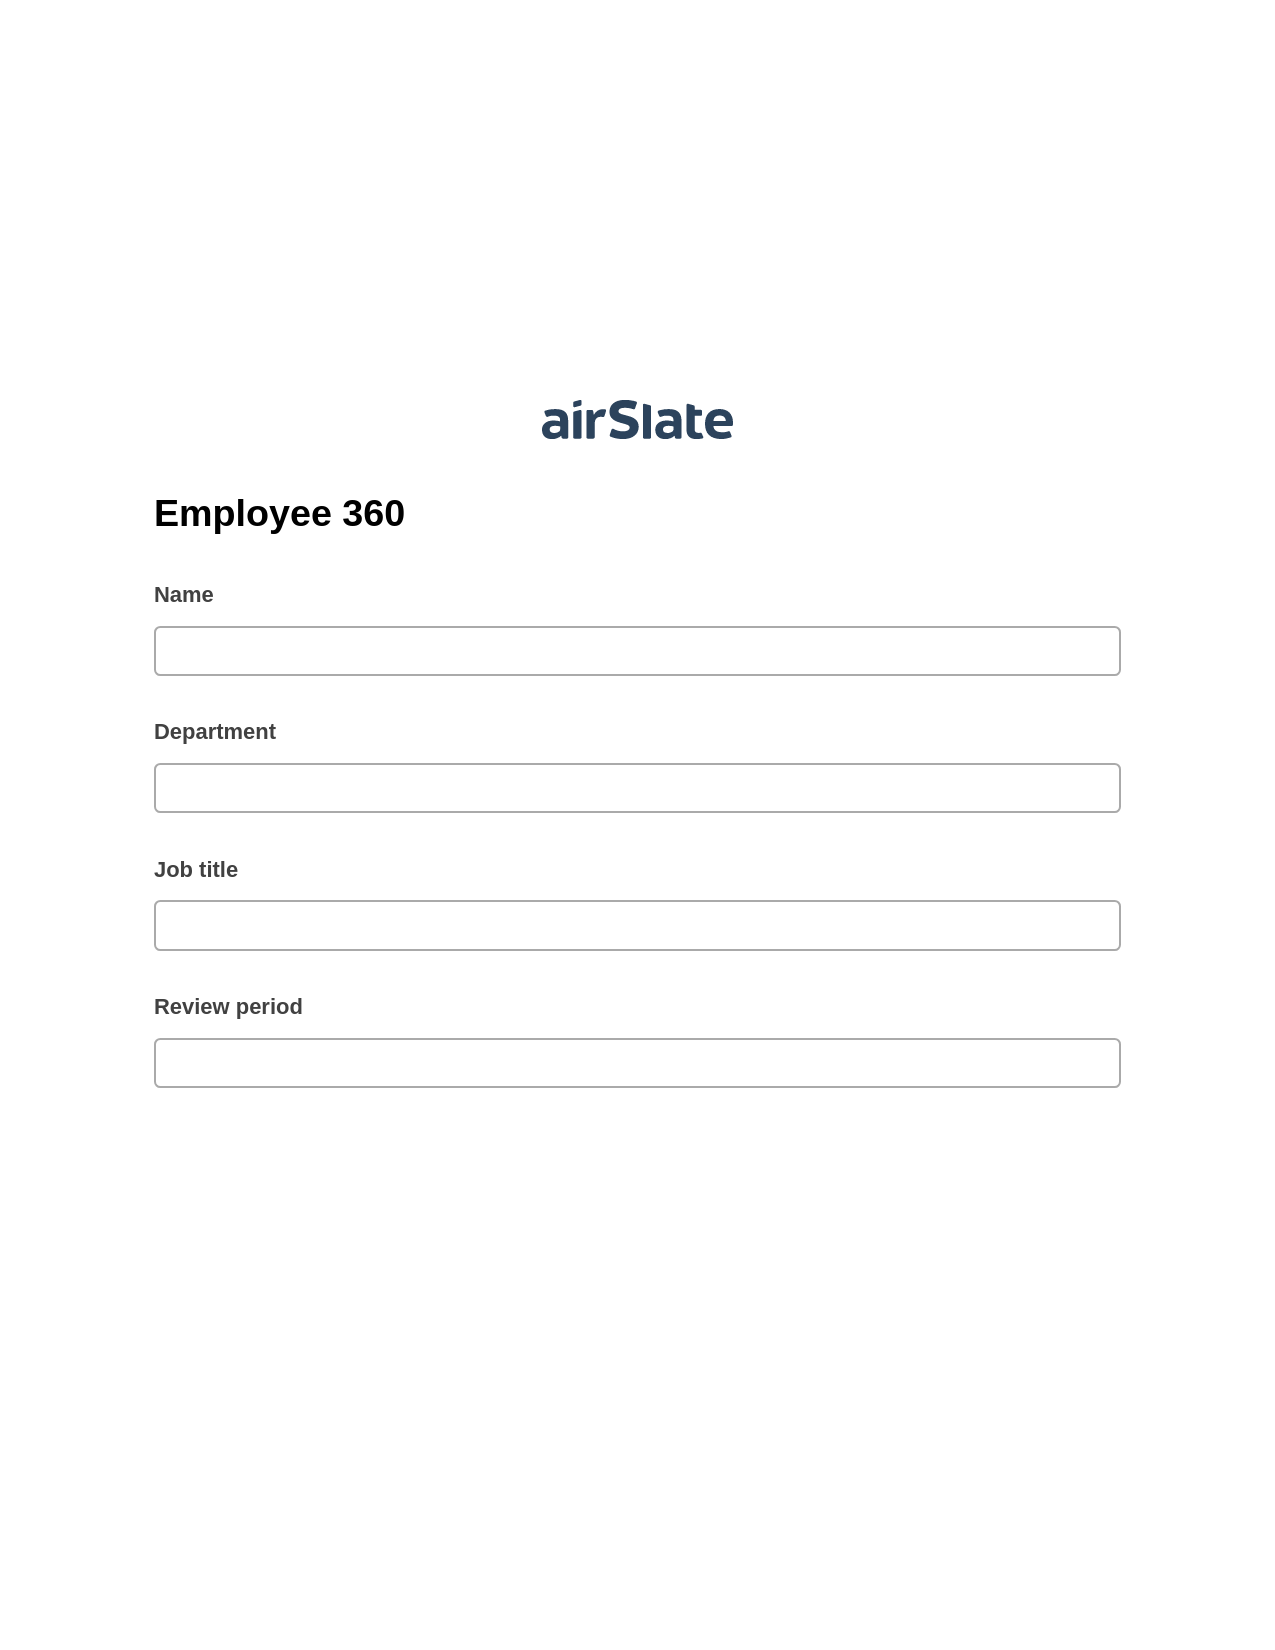 Multirole Employee 360 Pre-fill from CSV File Bot, Invoke Salesforce Process Bot, Archive to Dropbox Bot